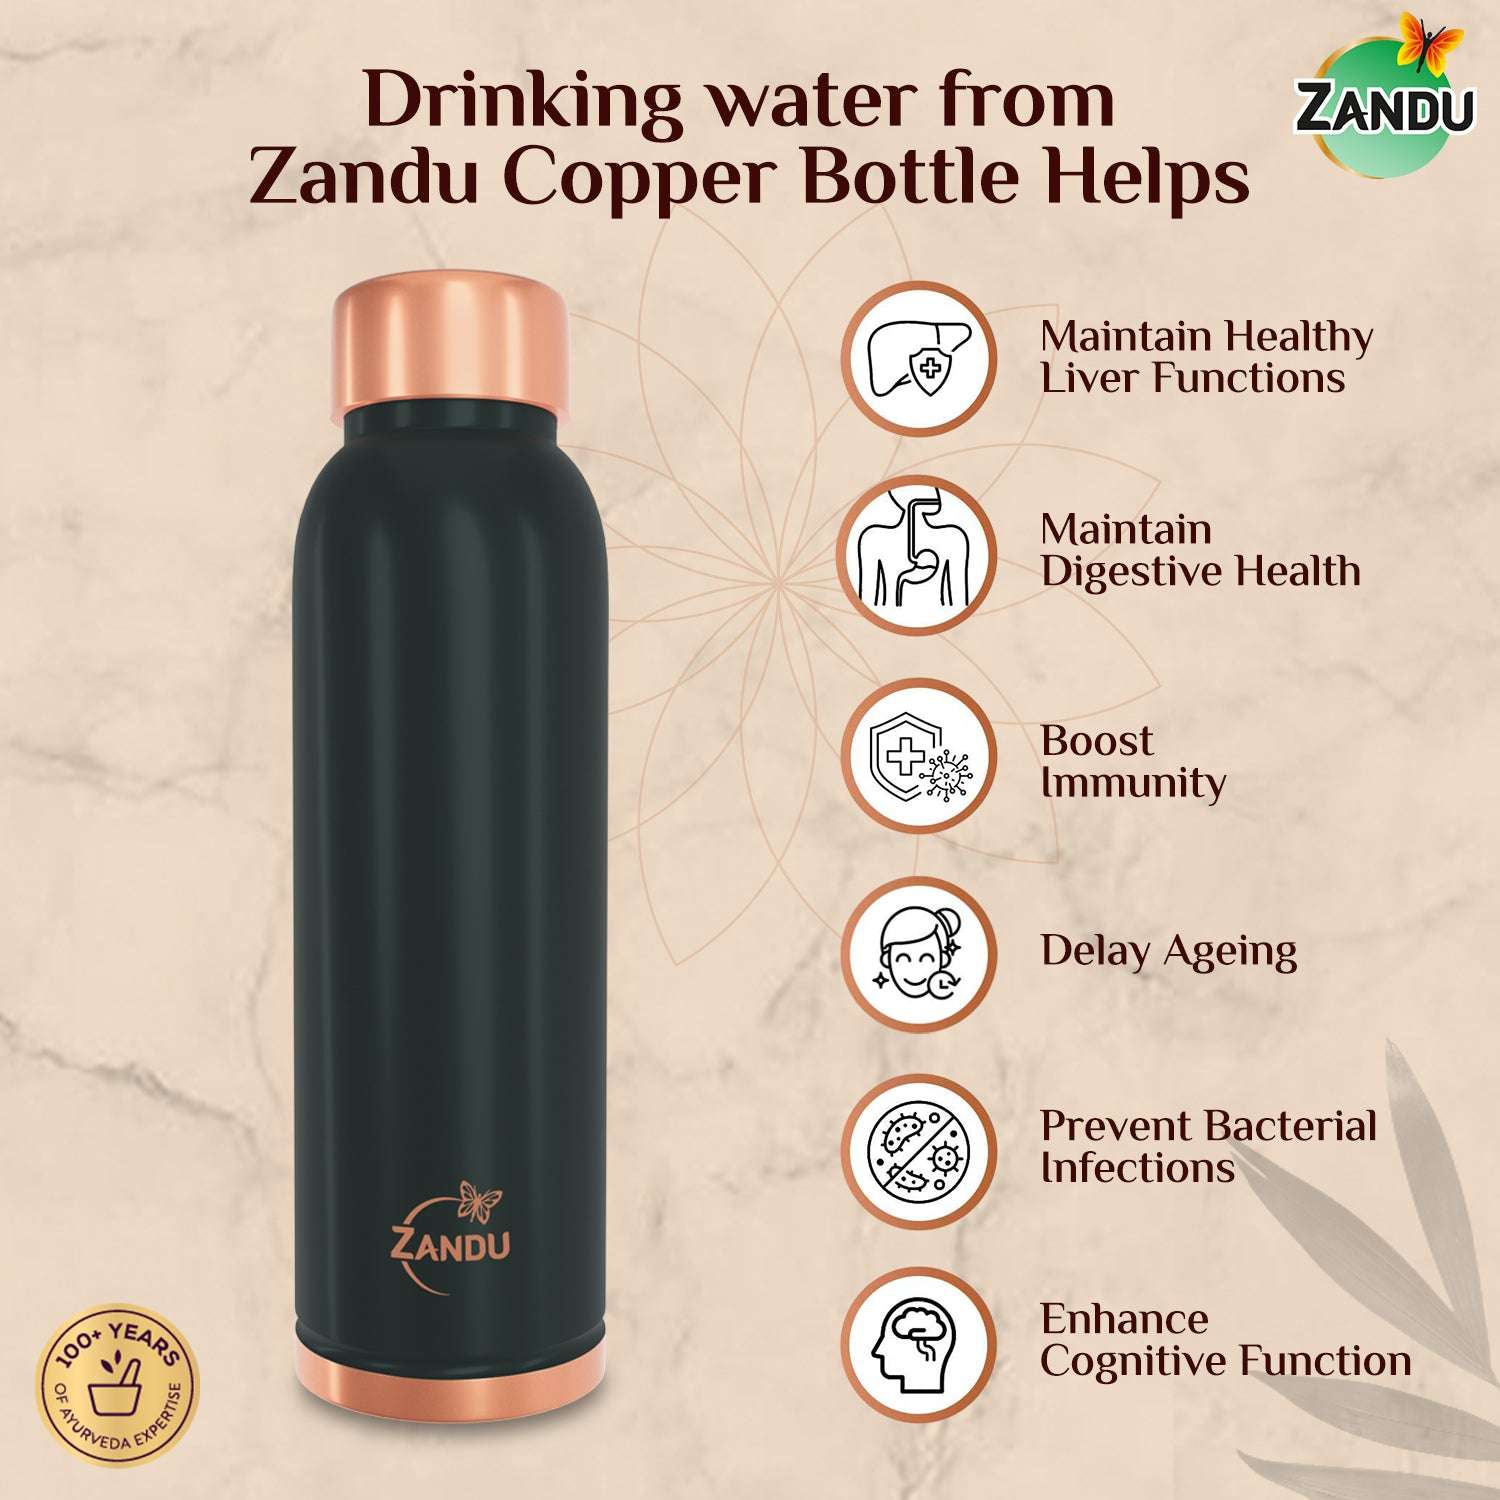 Zandu Copper Bottle Benefits